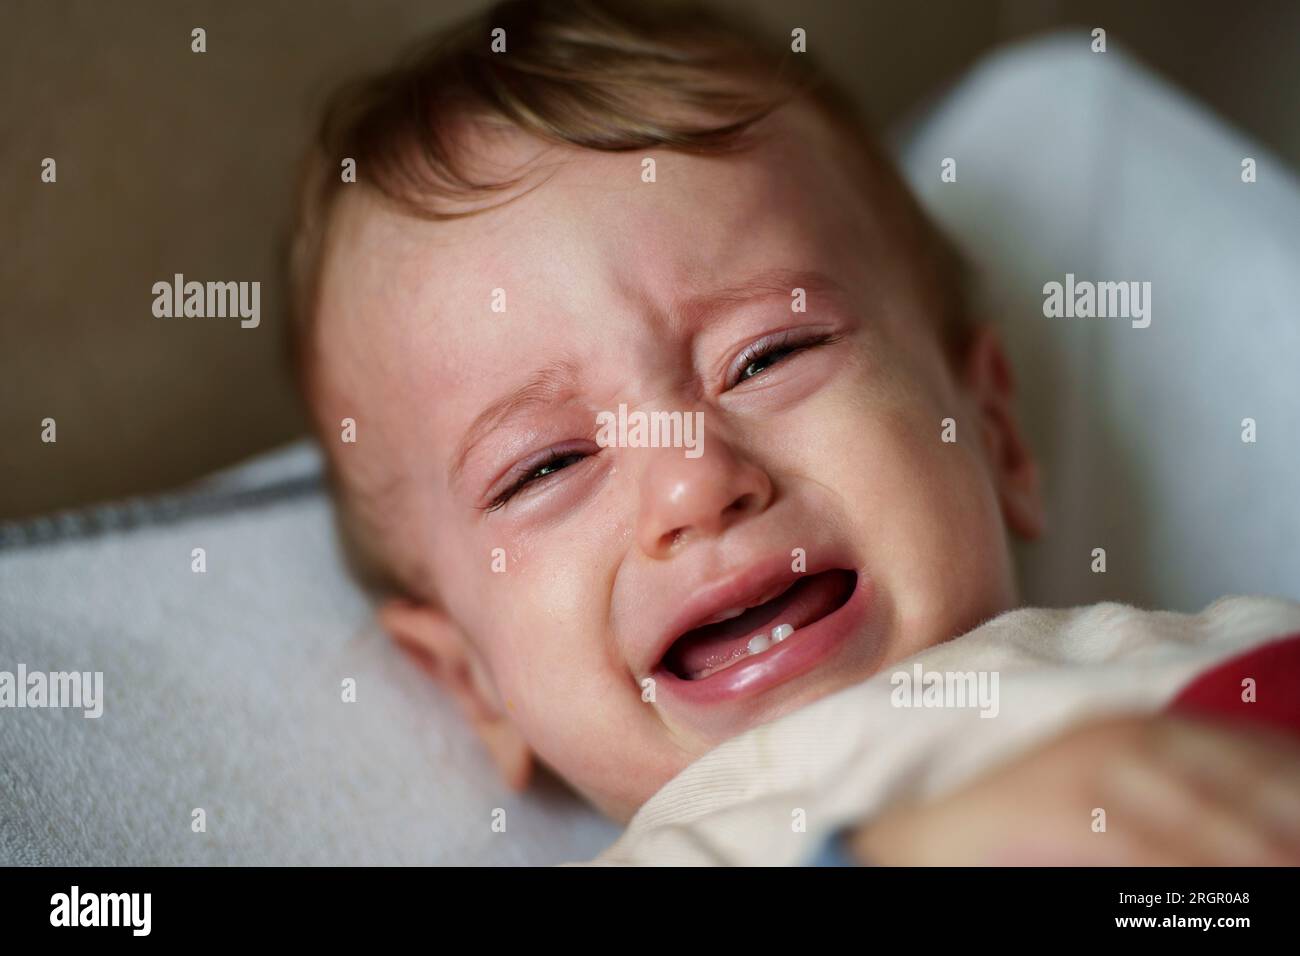 Agitated baby crying Stock Photo